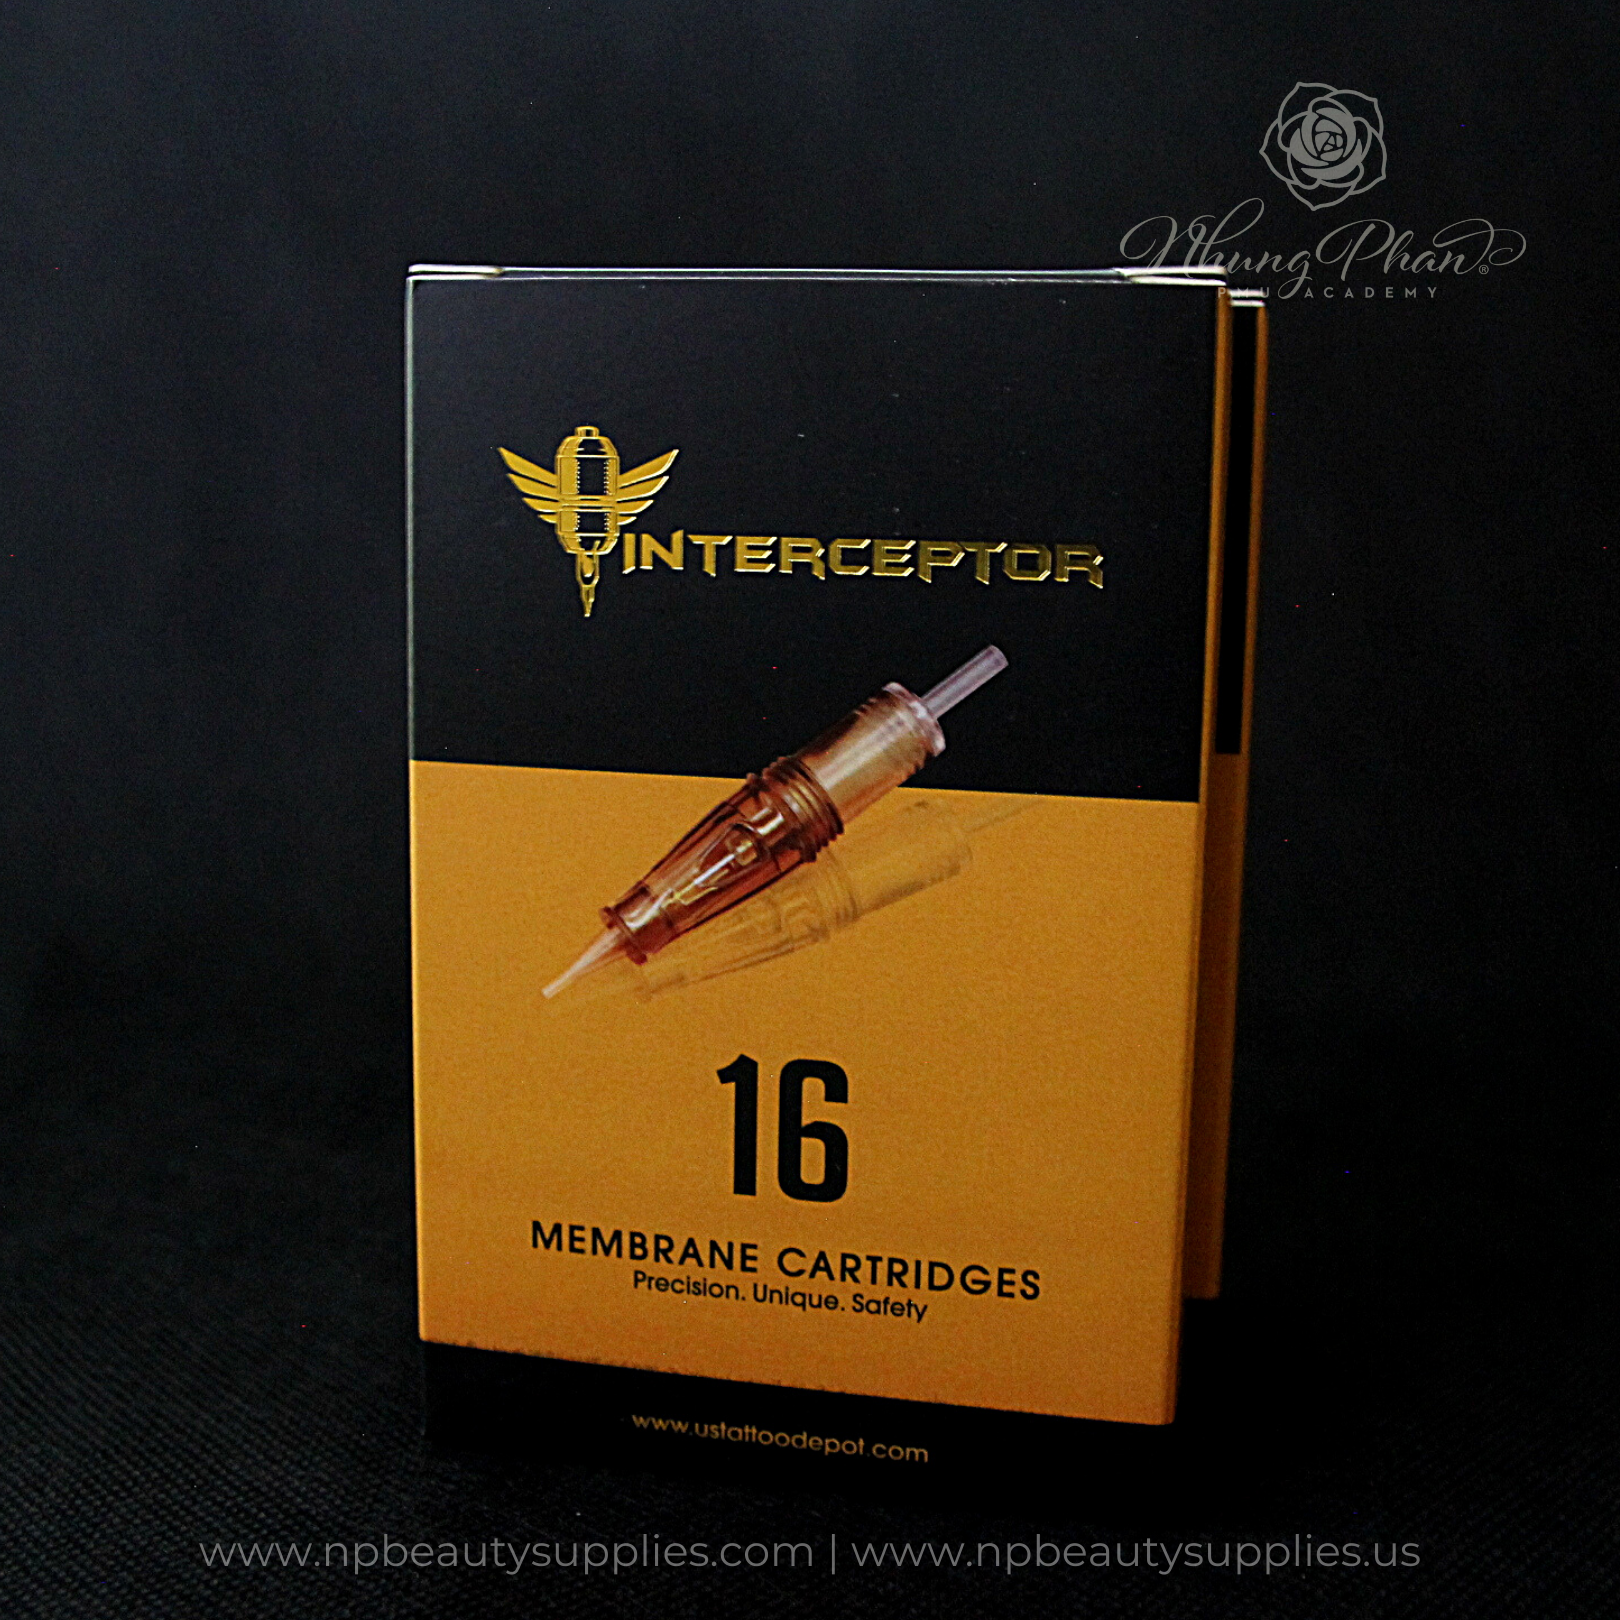 Interceptor Cartridge Needles